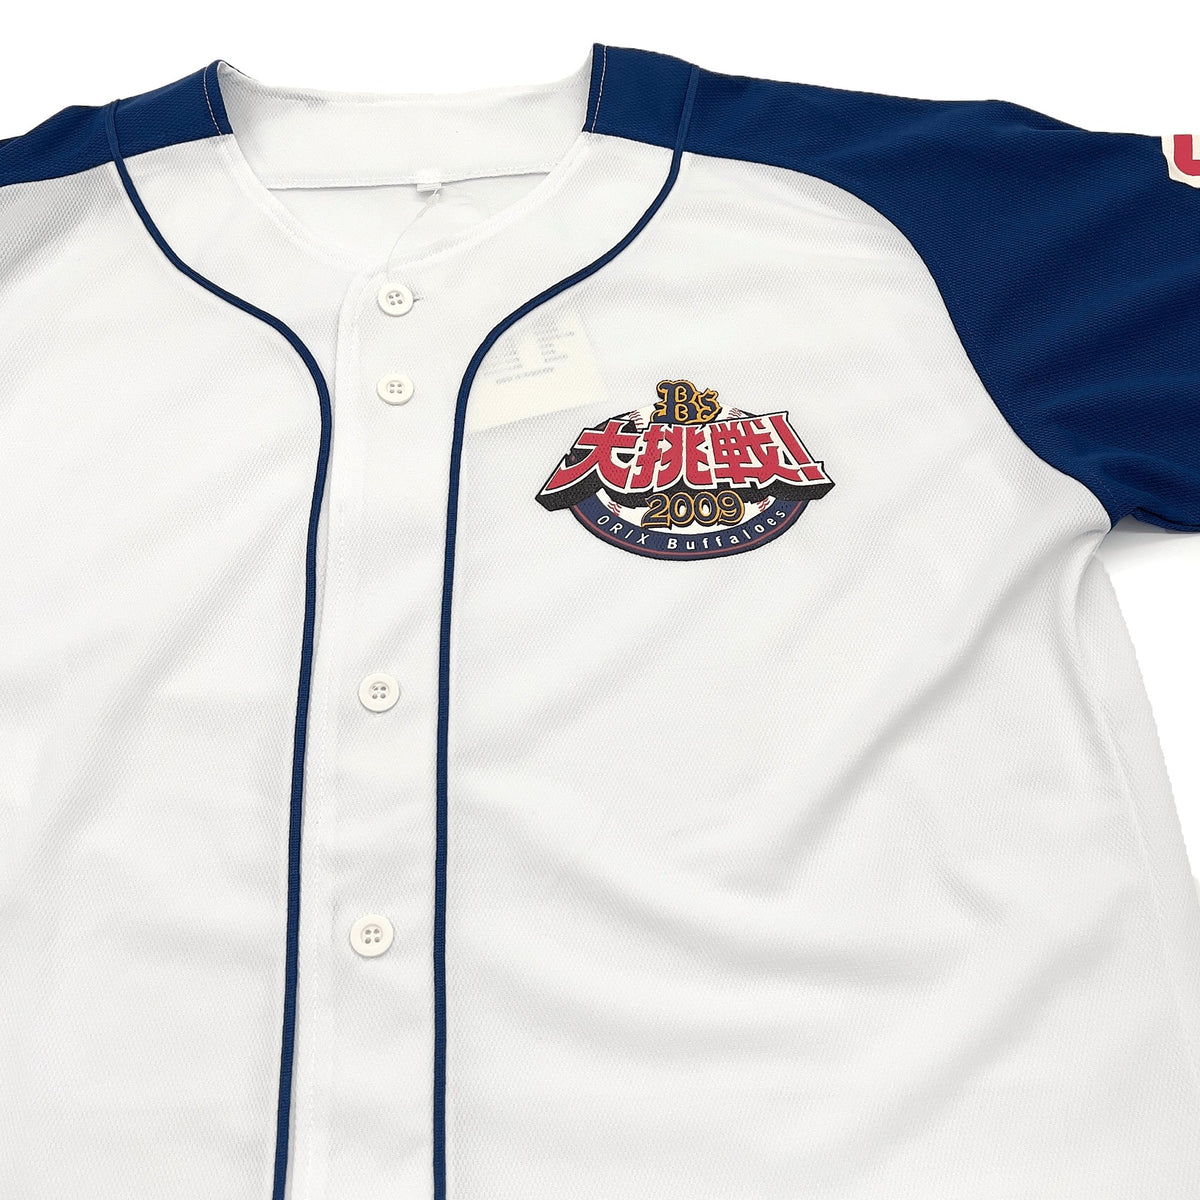 Vintage Japan NPB Orix Buffaloes 2009 Promotional Baseball Jersey